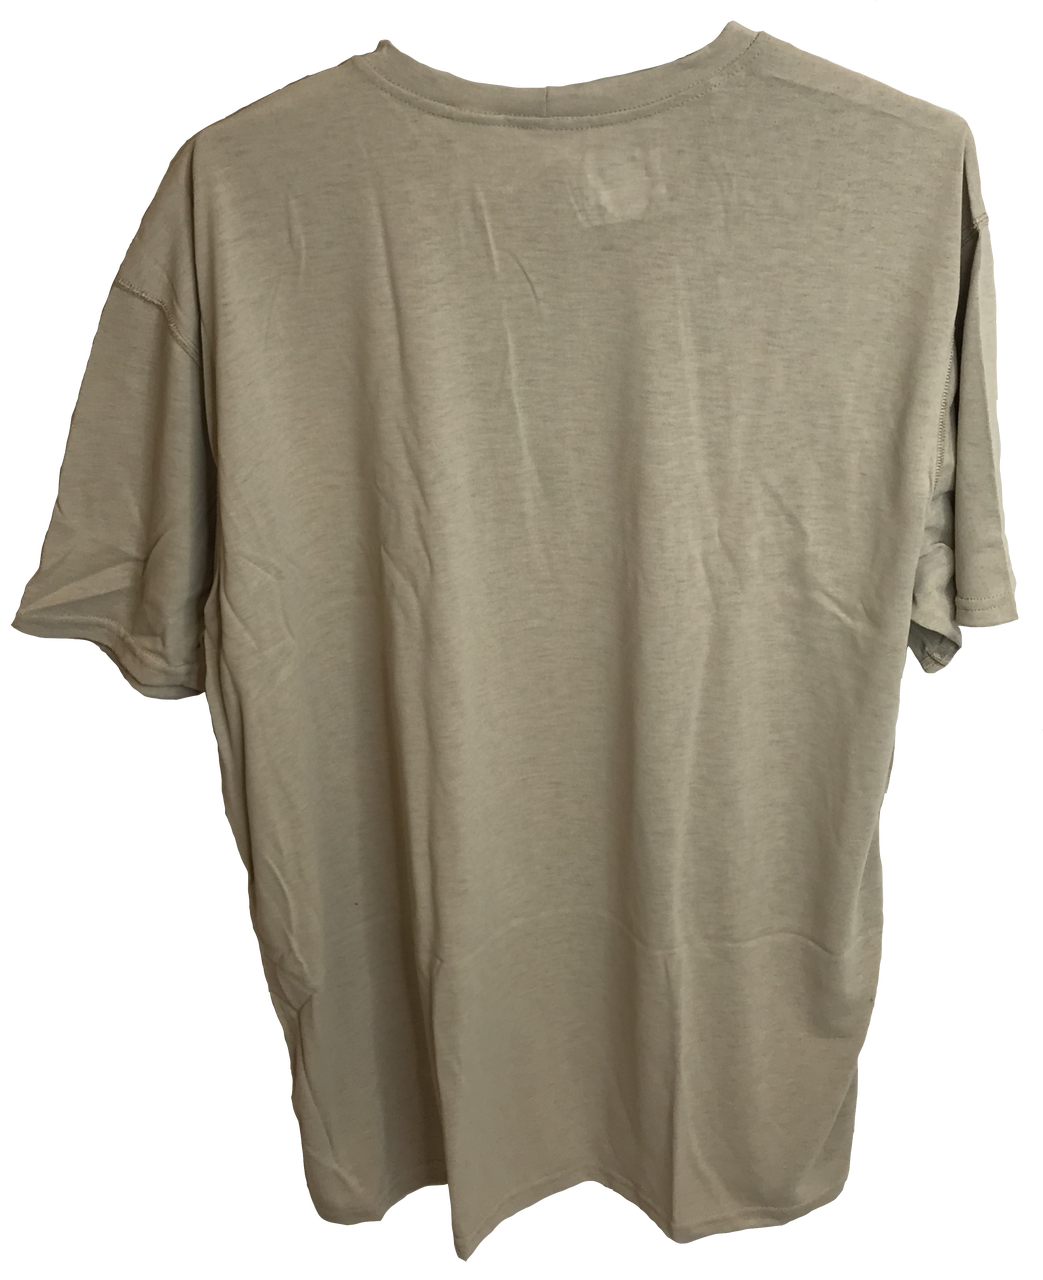 DRIFIRE Desert Sand T-Shirt Size XX-Large - Army Surplus Warehouse, Inc.